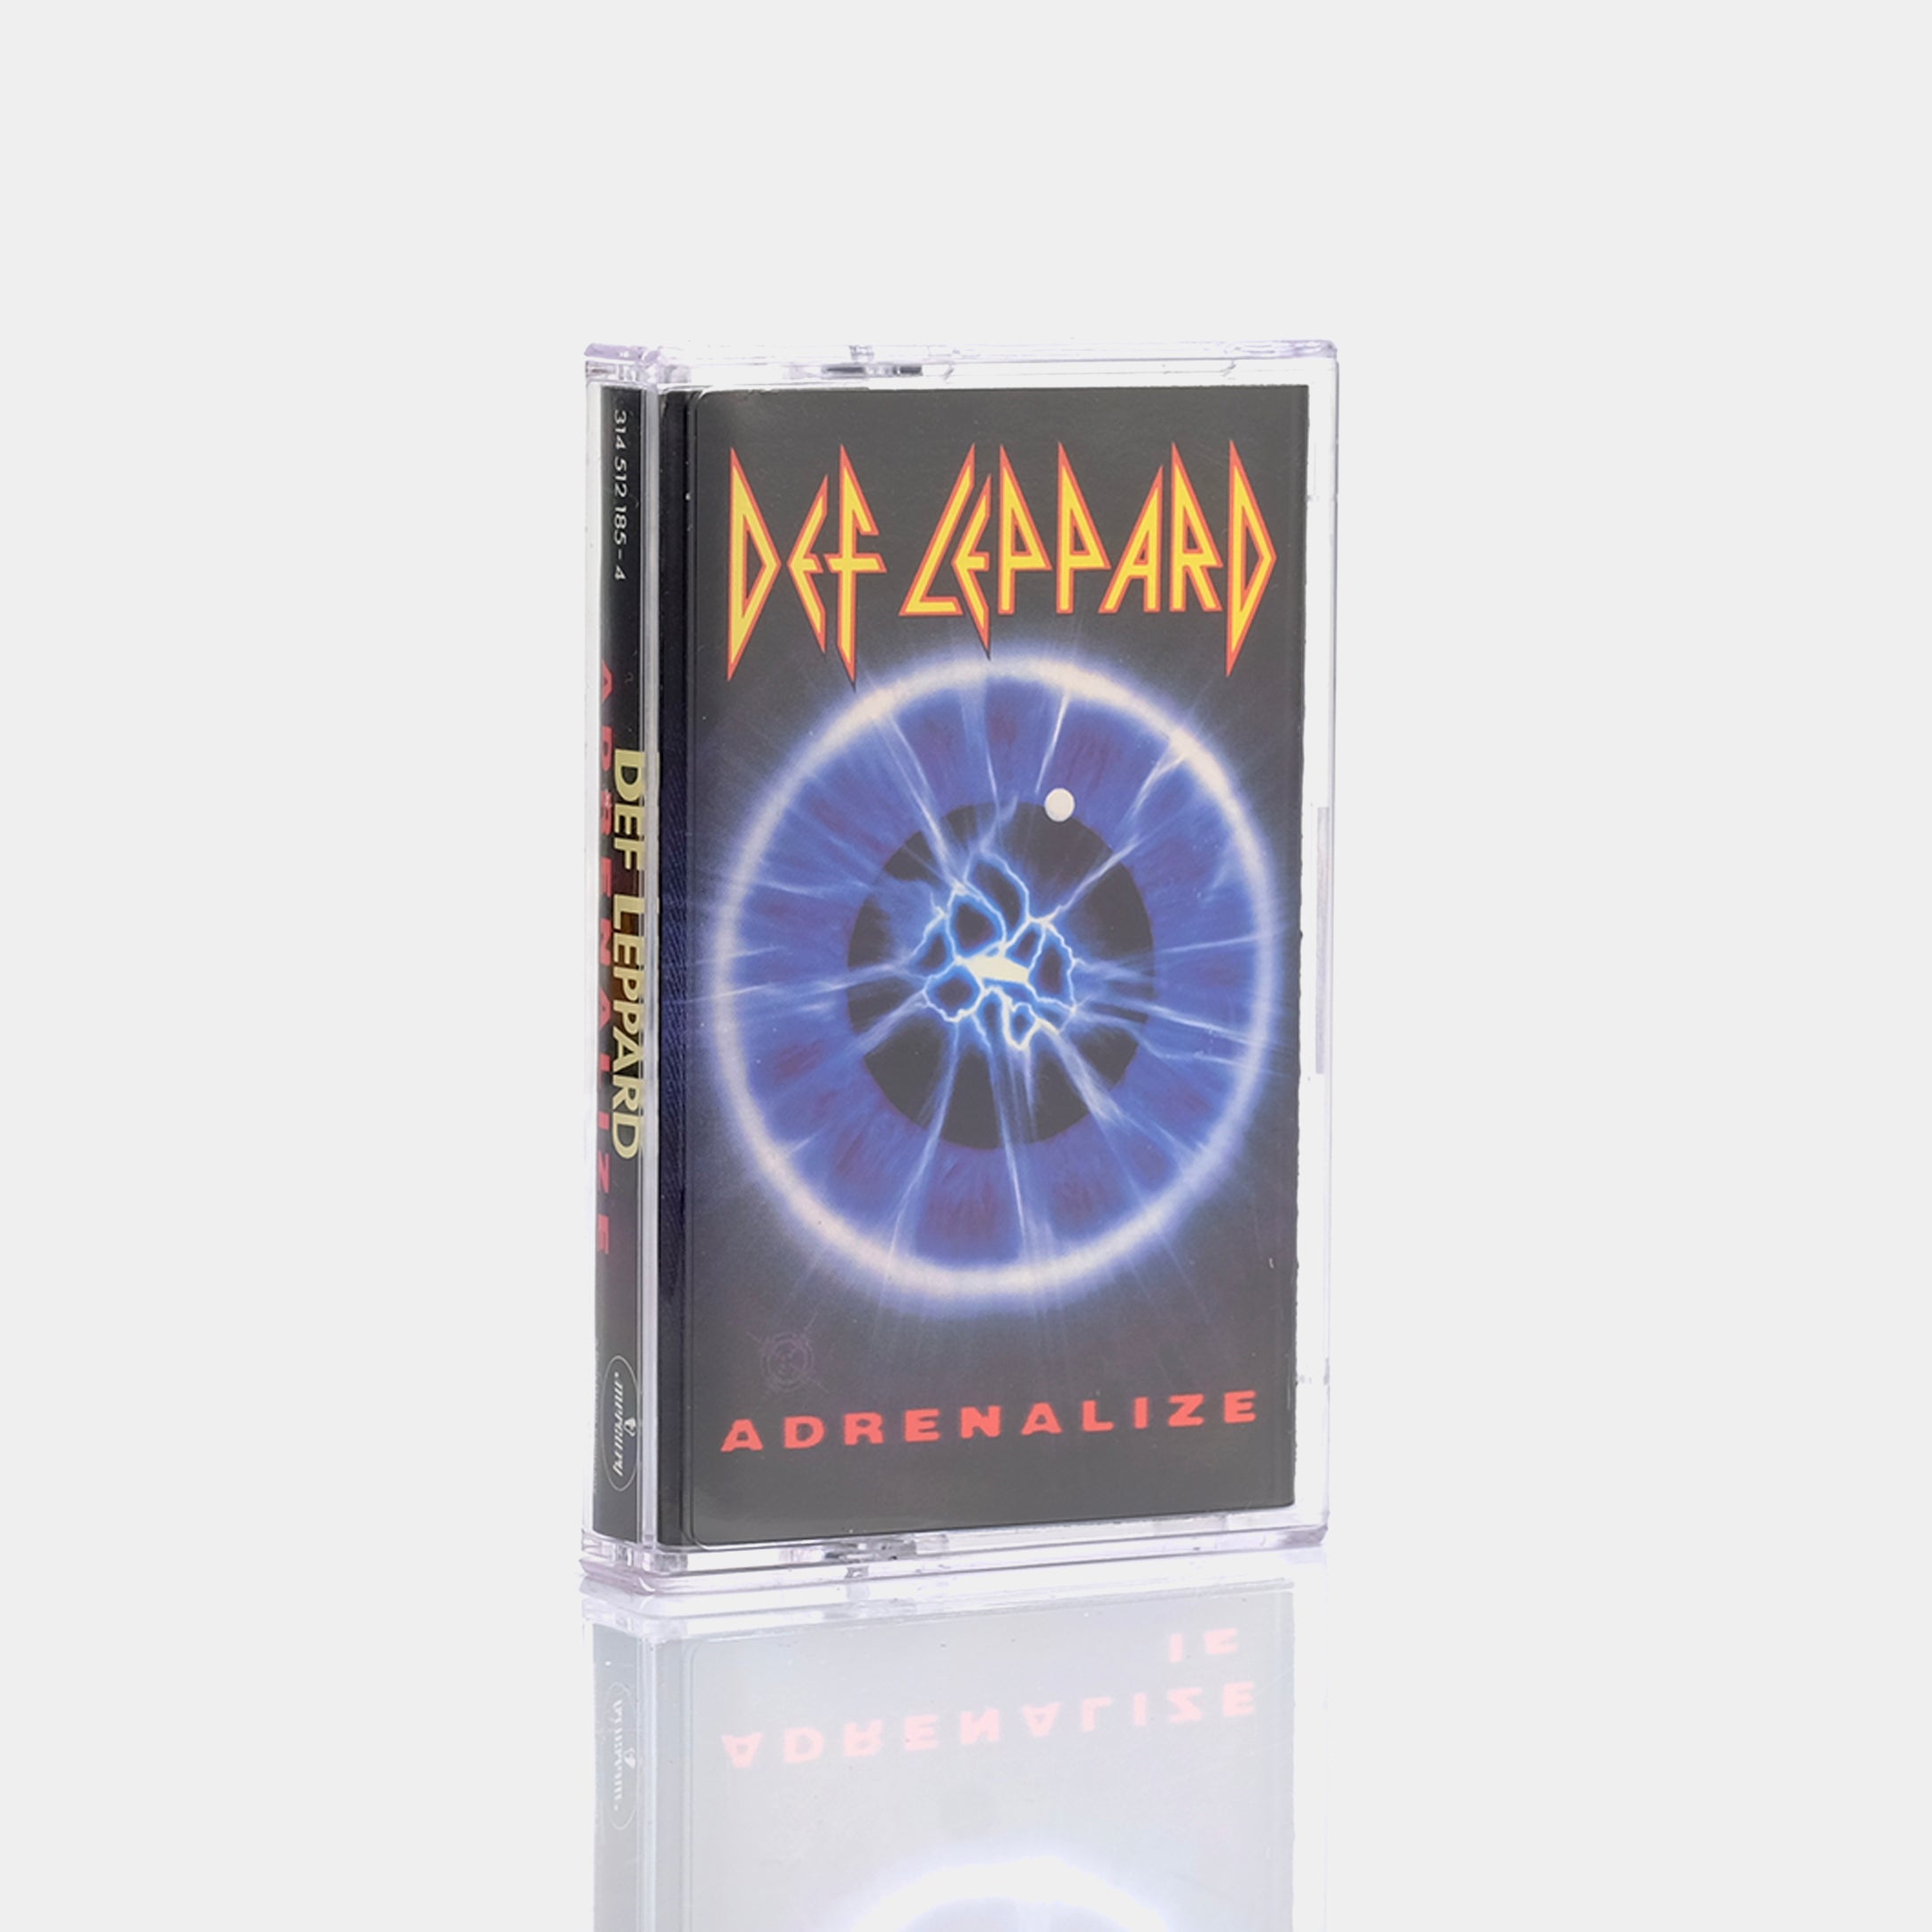 Def Leppard - Adrenalize Cassette Tape